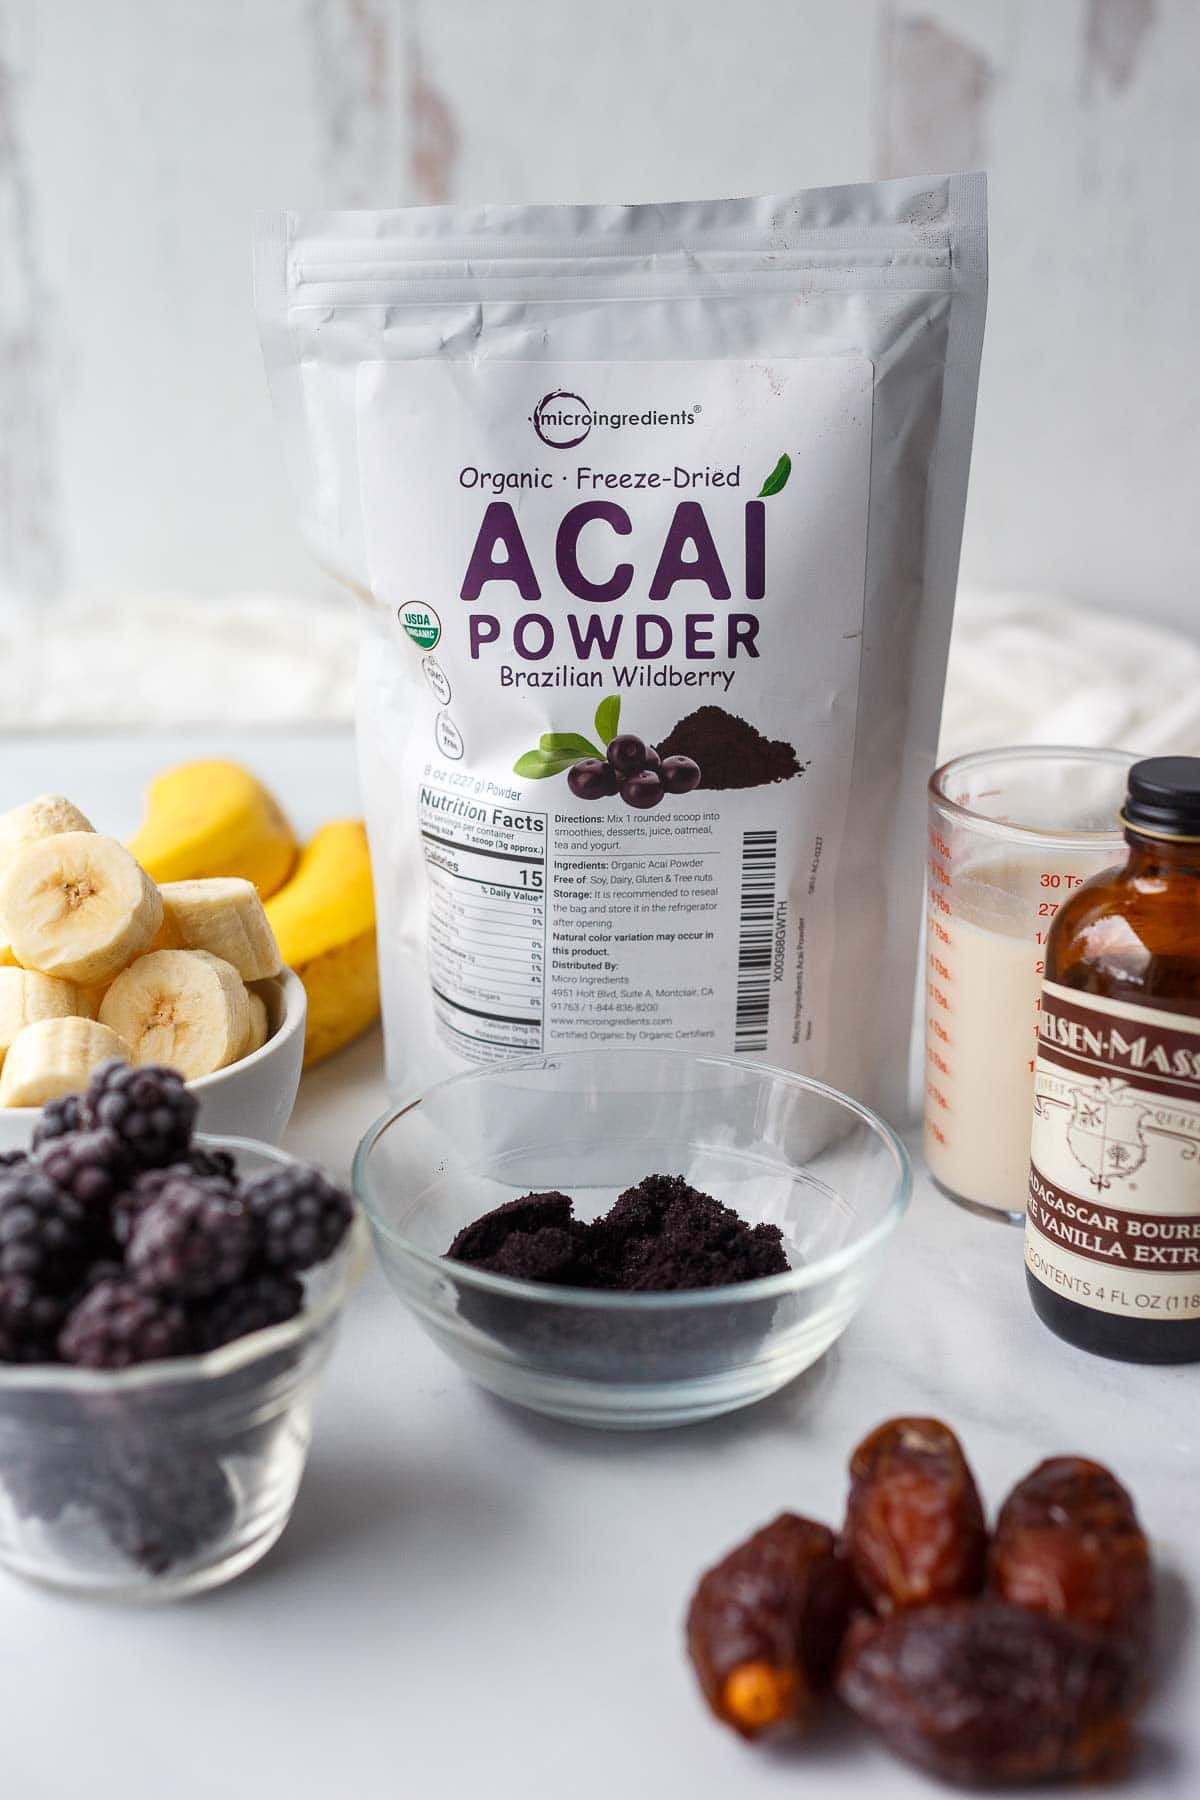 ingredients for acai bowls- organic freeze-dried acai powder, bananas, blackberries, milk, dates.